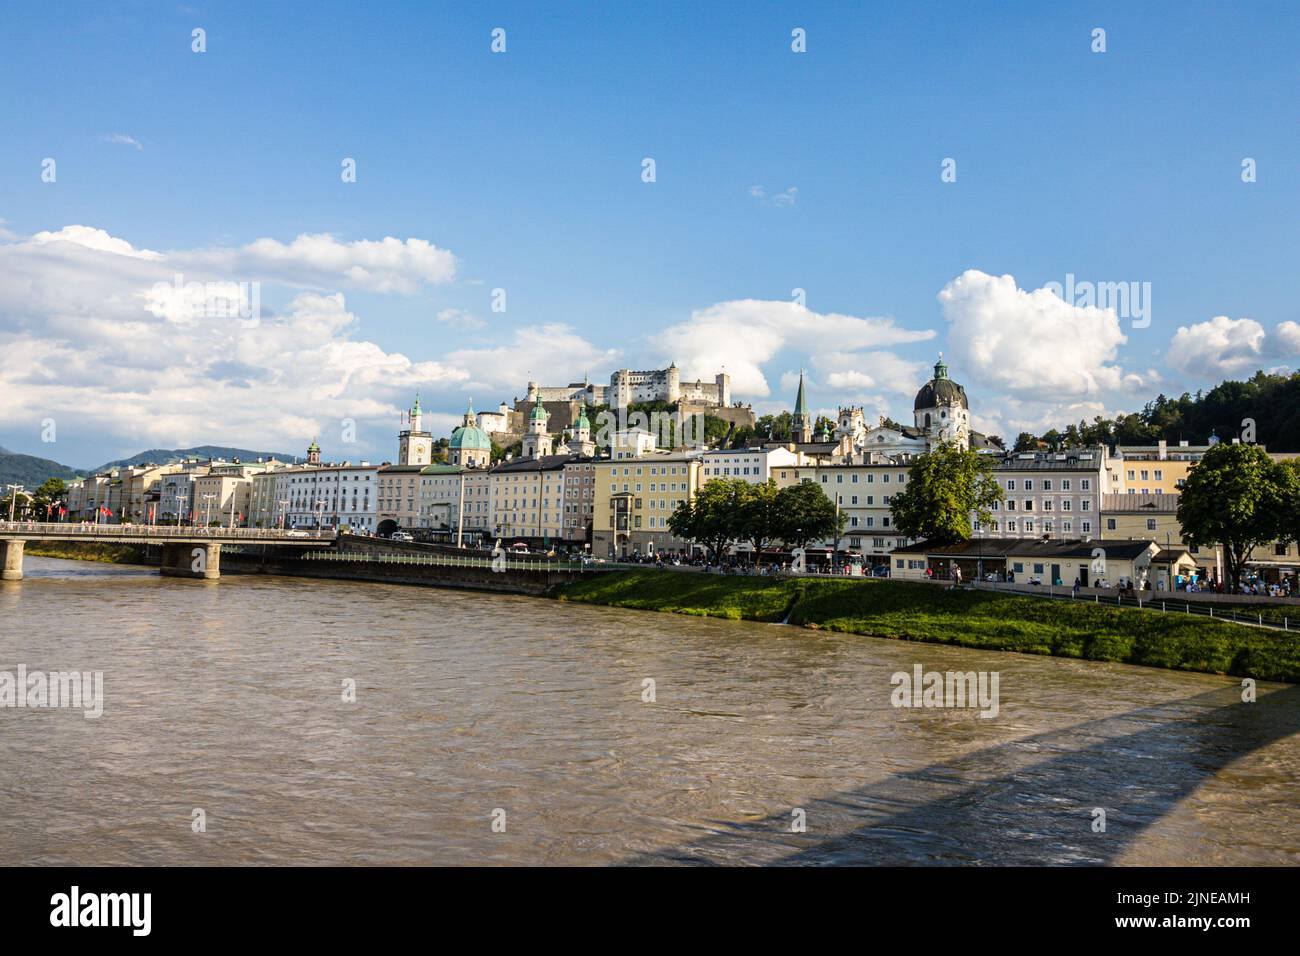 the fast-flowing Salzach River or Salzburg River, Salzburg, Salzburger Land, Austria, Europe Stock Photo